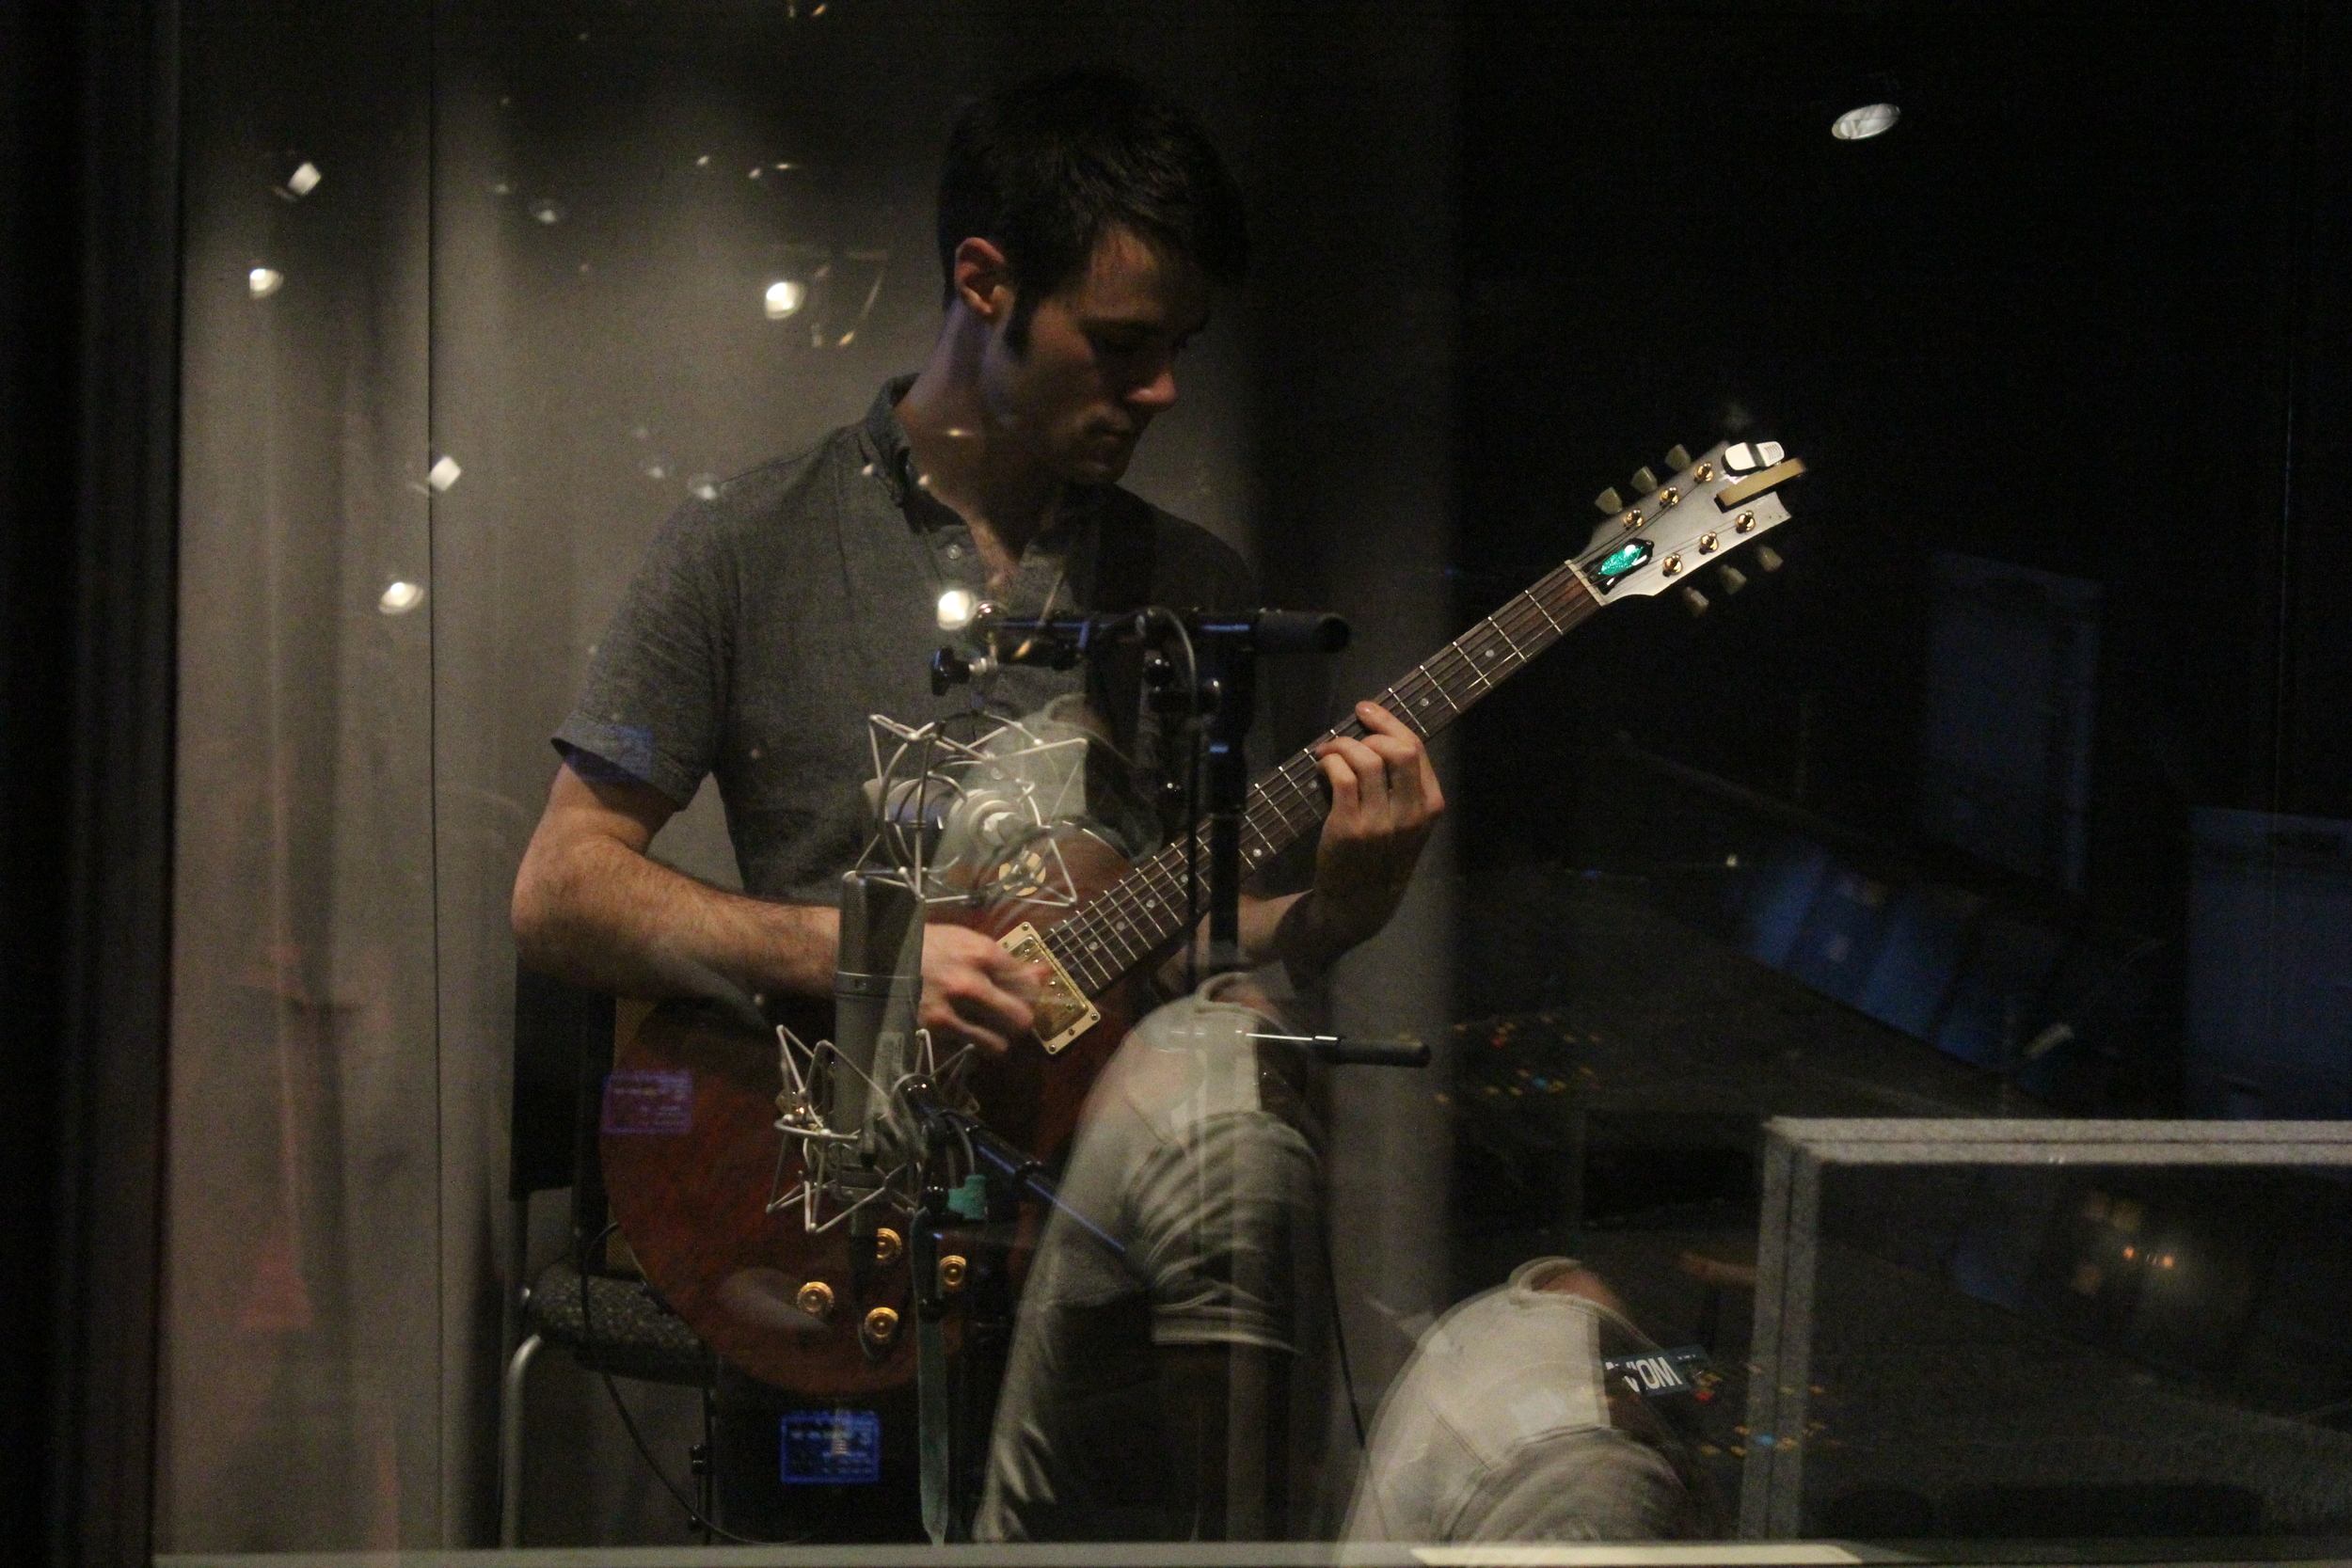 Chris Frank on guitar